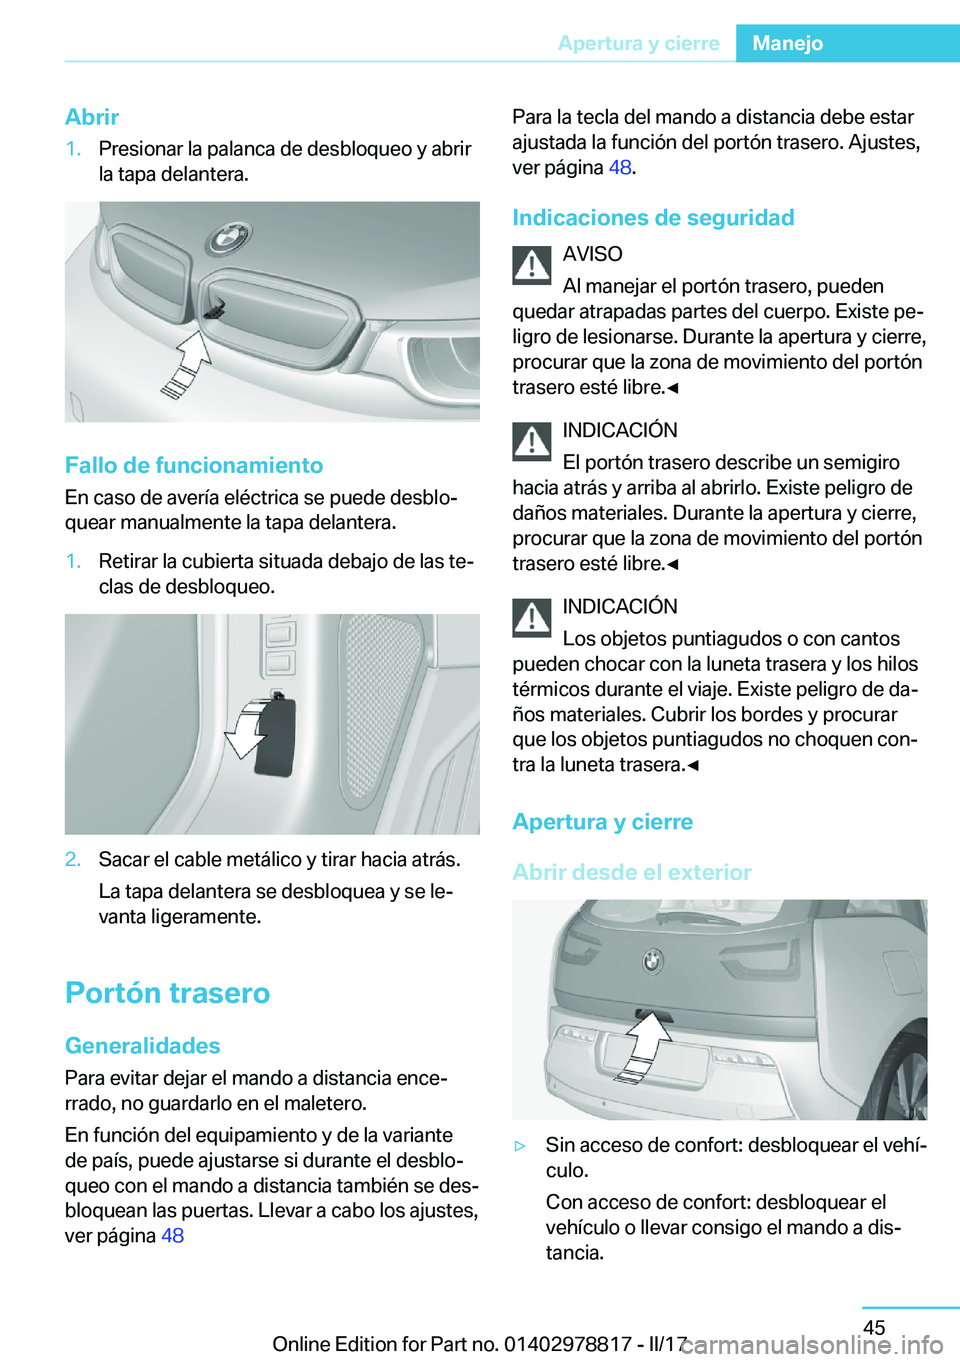 BMW I3 2017  Manuales de Empleo (in Spanish) �A�b�r�i�r�1�.�P�r�e�s�i�o�n�a�r� �l�a� �p�a�l�a�n�c�a� �d�e� �d�e�s�b�l�o�q�u�e�o� �y� �a�b�r�i�r�l�a� �t�a�p�a� �d�e�l�a�n�t�e�r�a�.
�F�a�l�l�o��d�e��f�u�n�c�i�o�n�a�m�i�e�n�t�o
�E�n� �c�a�s�o� �d